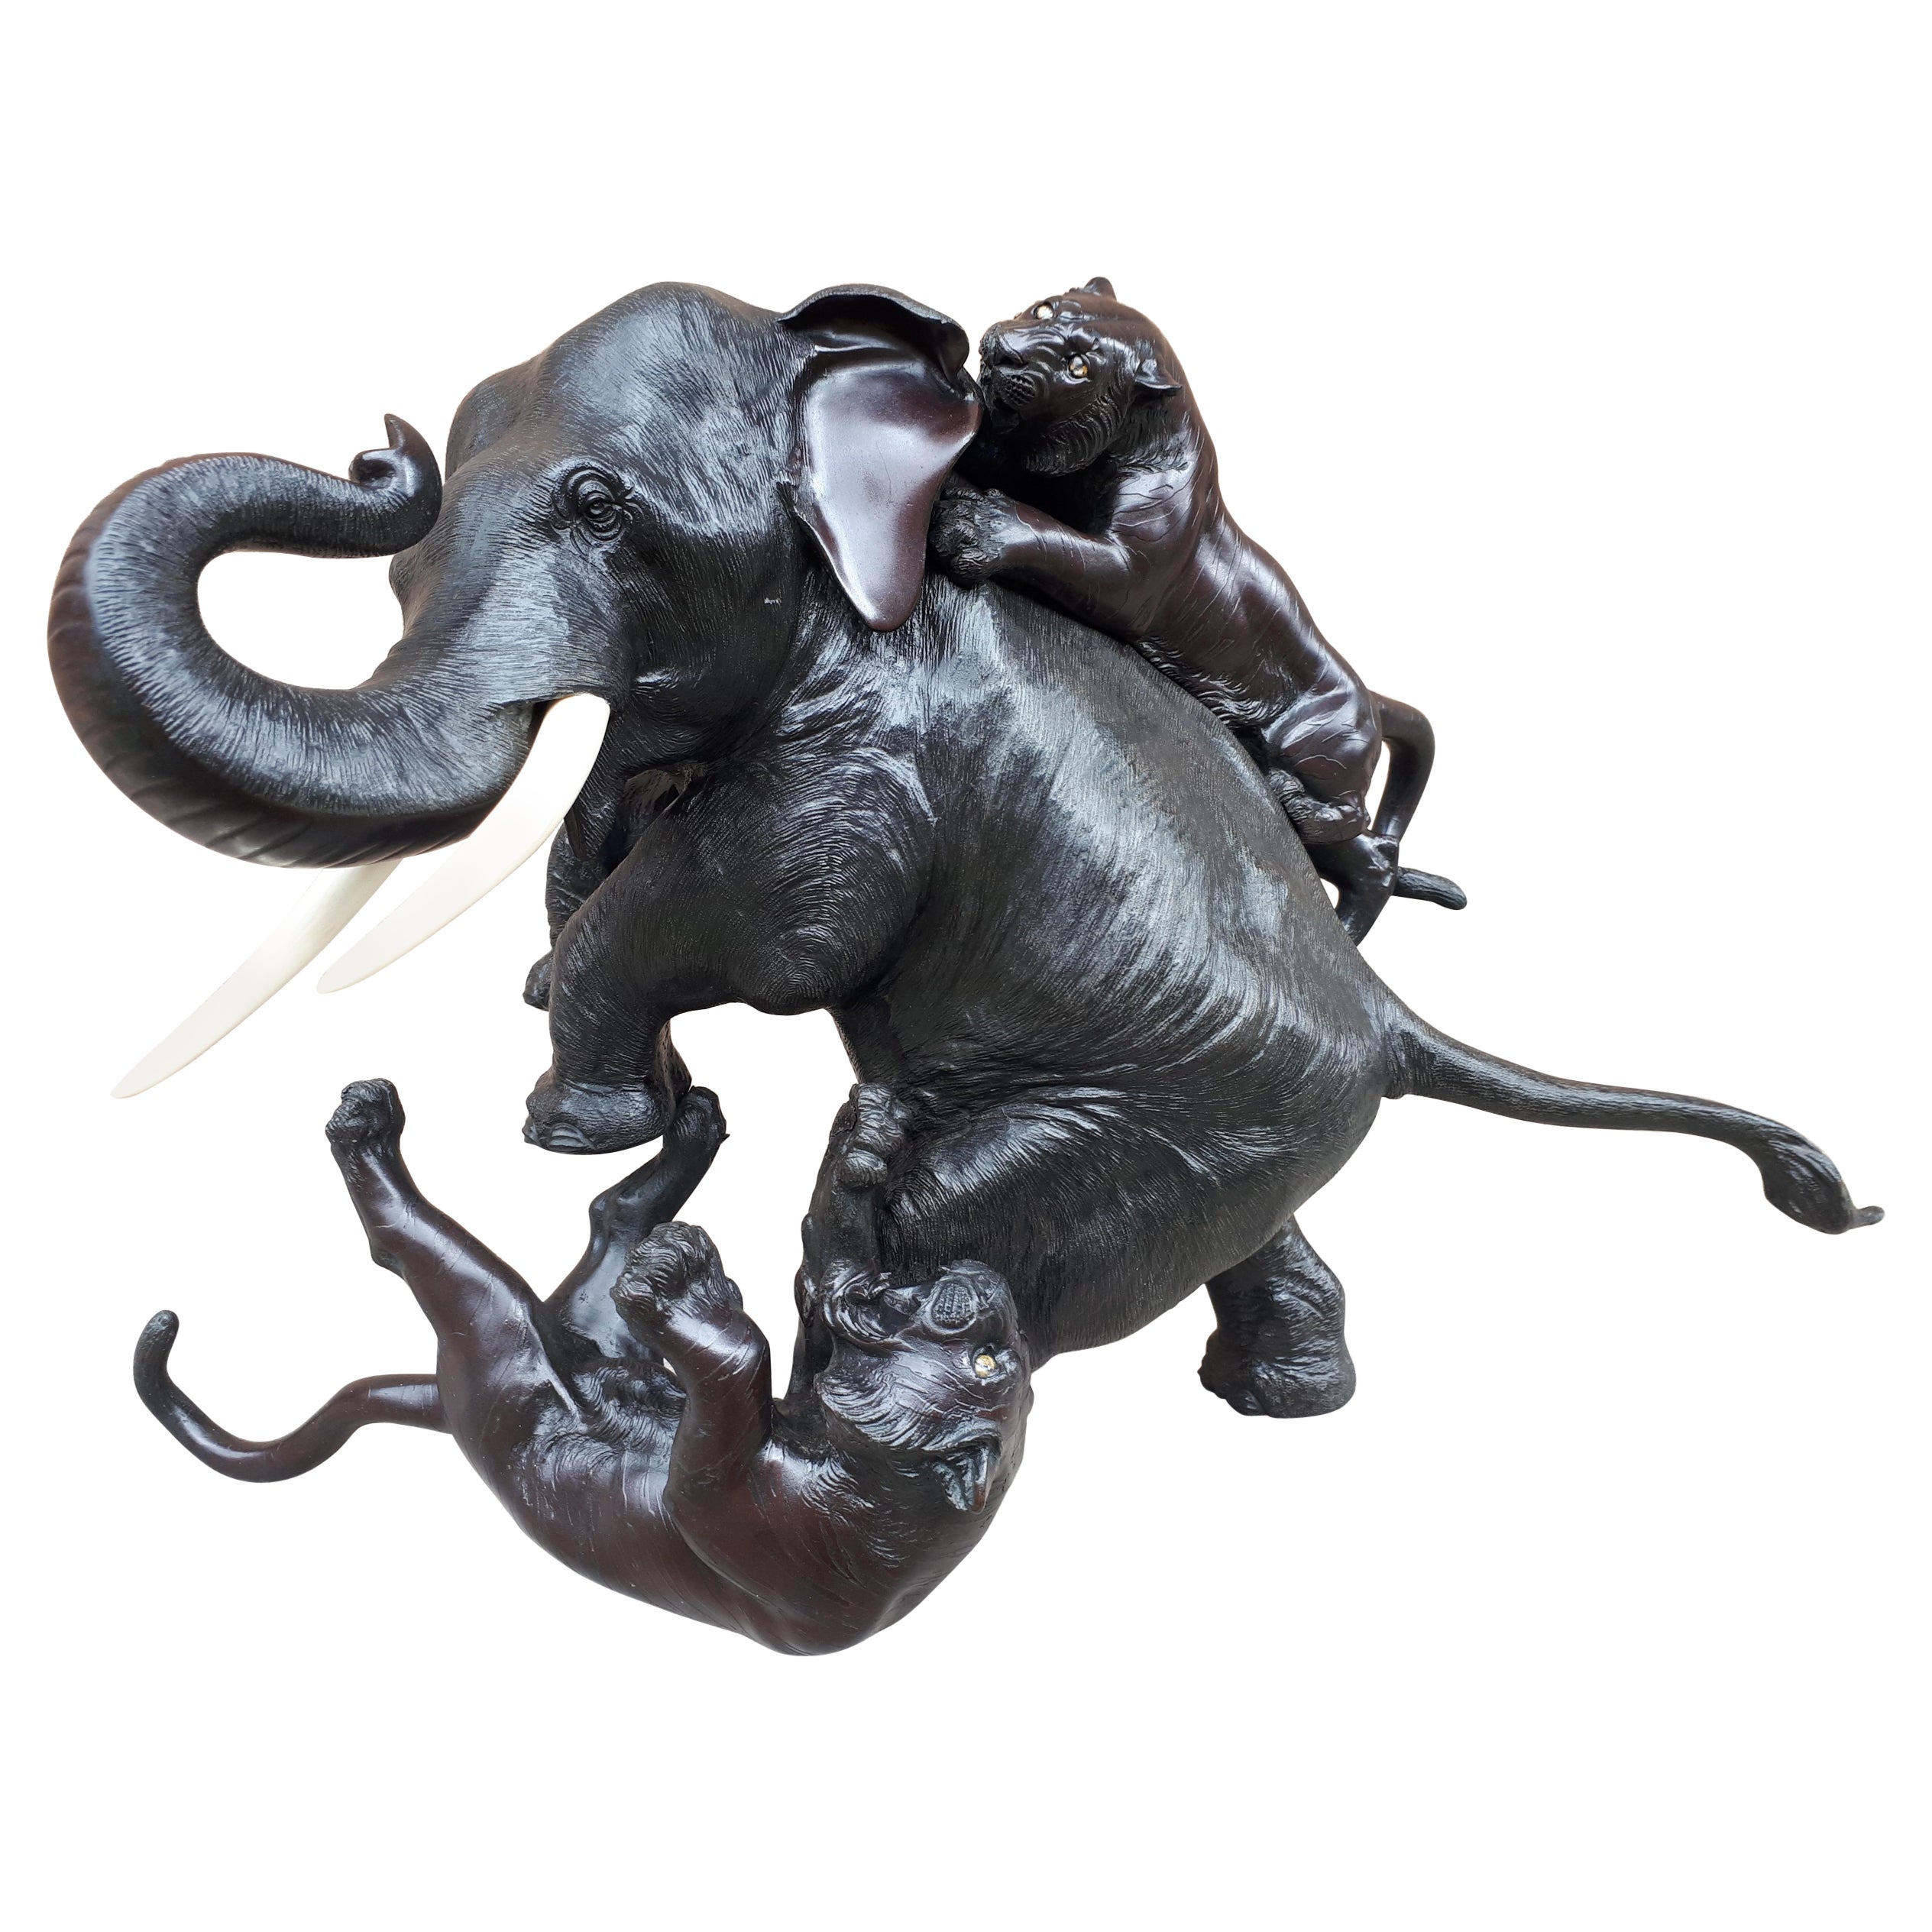 Okimono - Bronze Sculpture Of An Elephant Attacked By Tigers, Japan Meiji Era